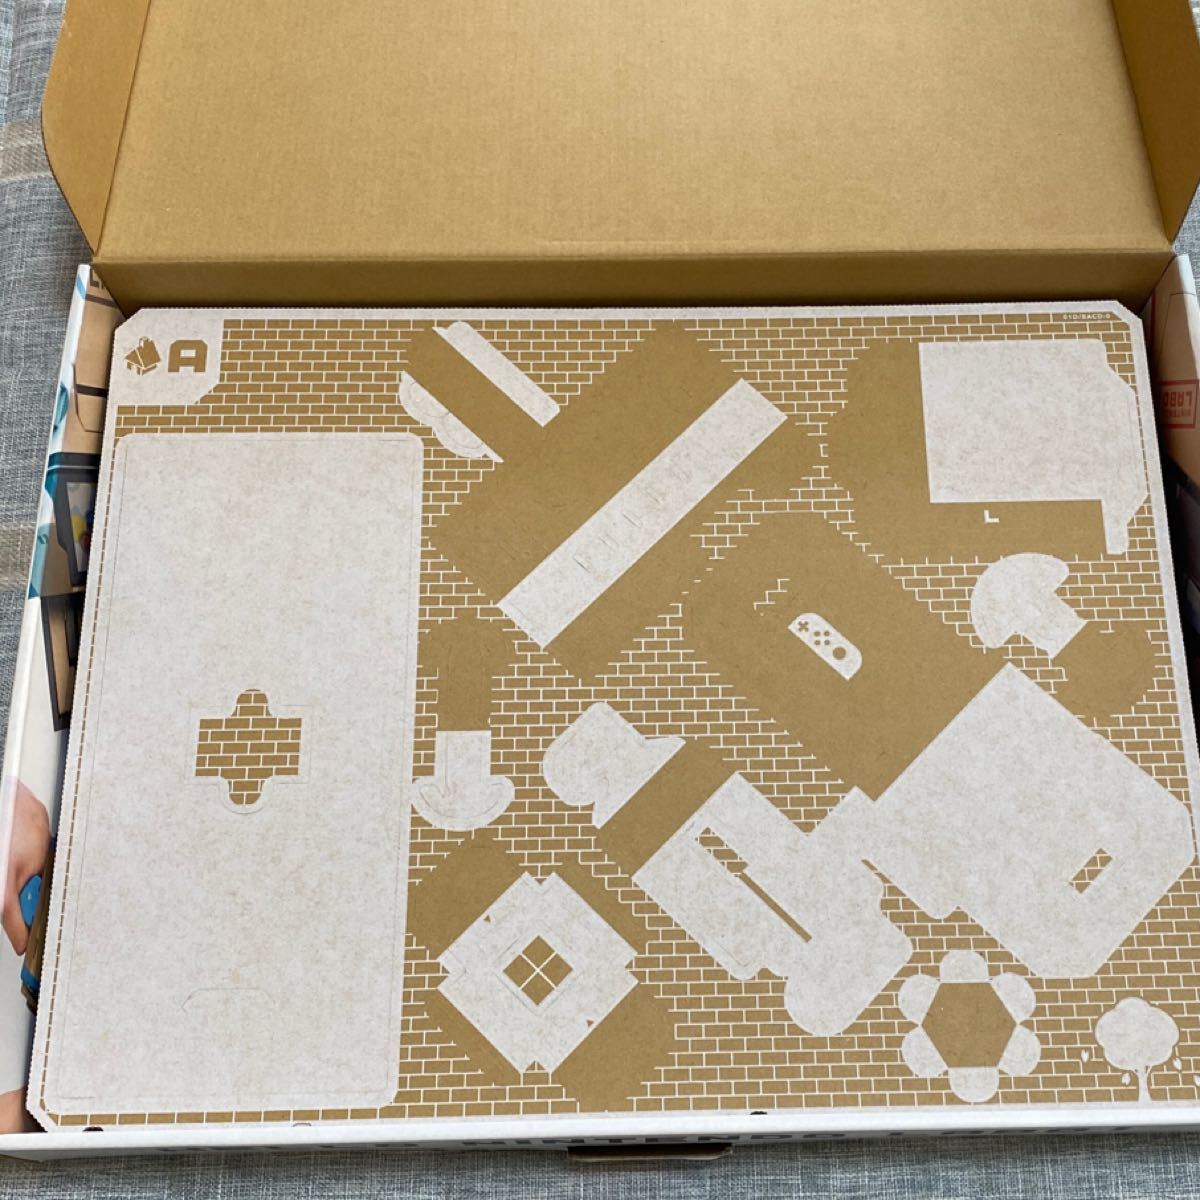 【Switch】 Nintendo Labo Toy-Con 01: Variety Kit